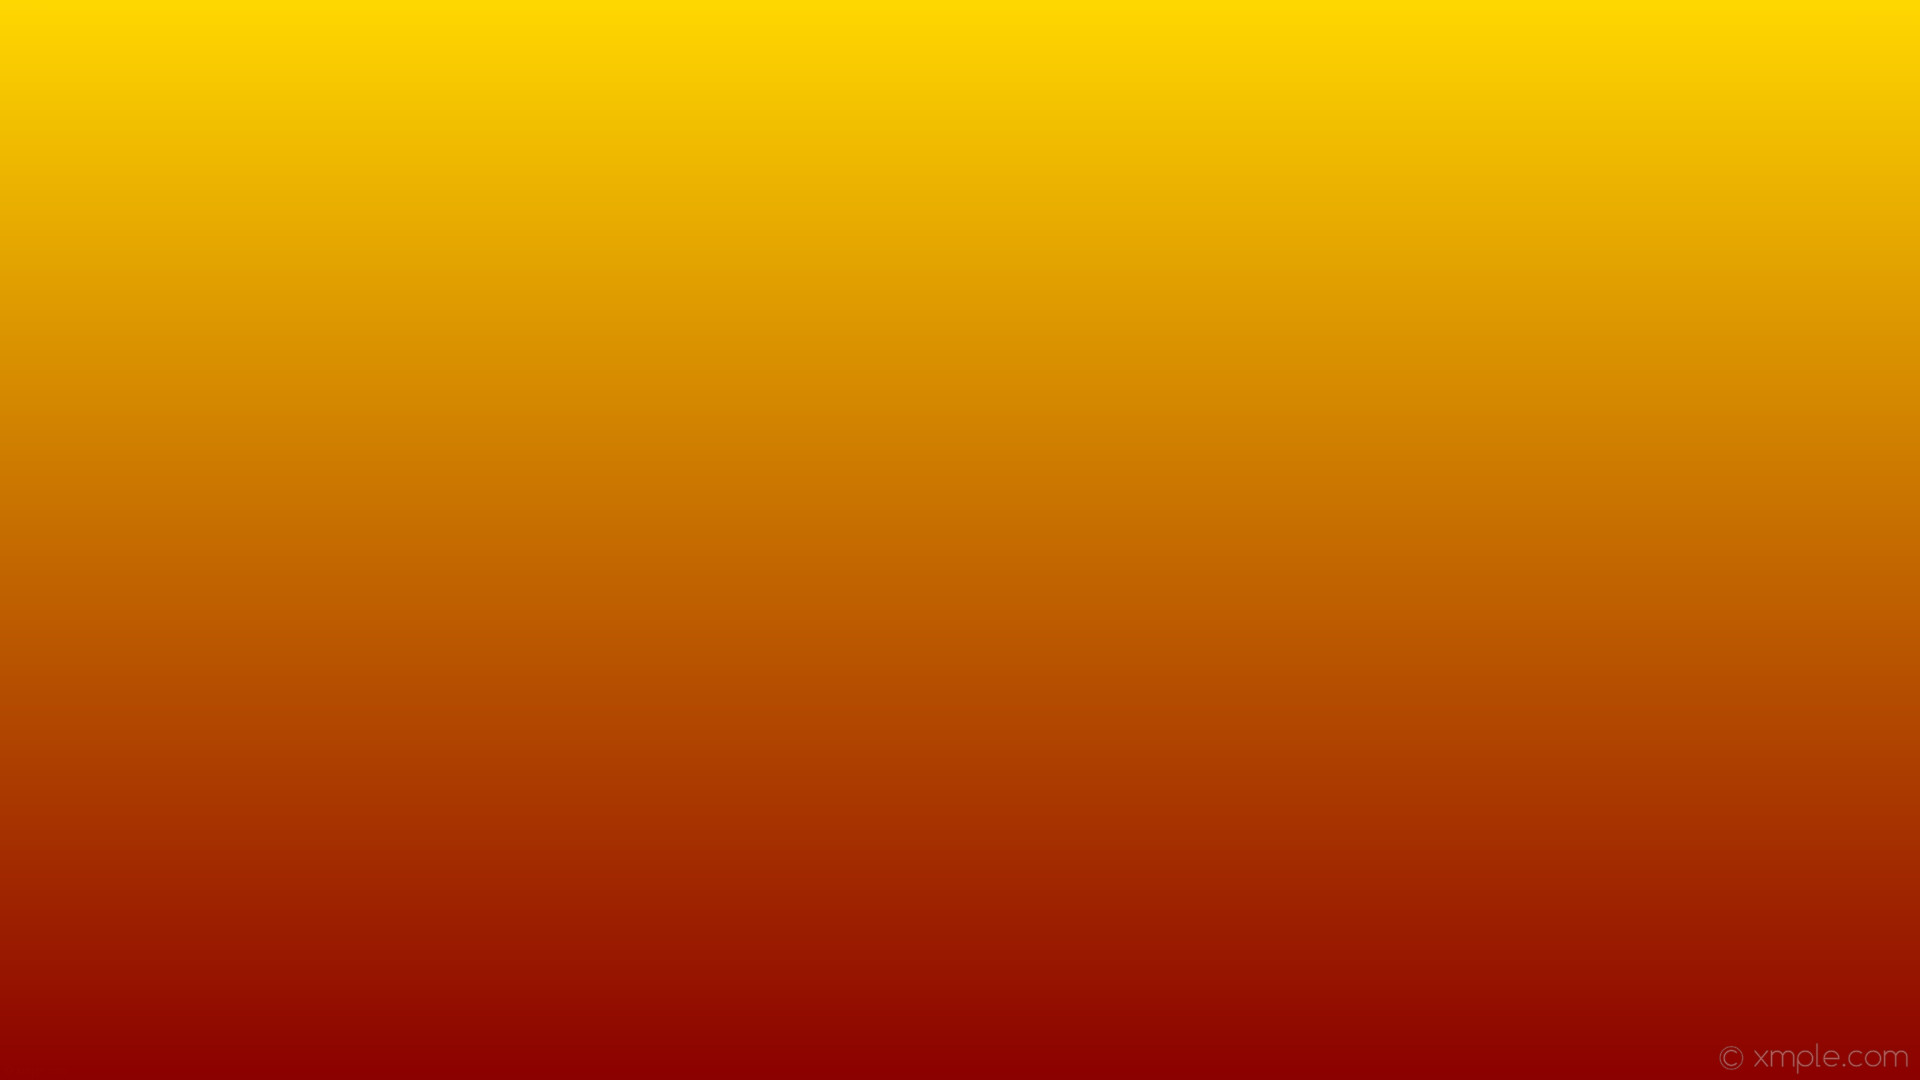 1920x1080 wallpaper linear gradient yellow red gold dark red #ffd700 #8b0000 90Â°